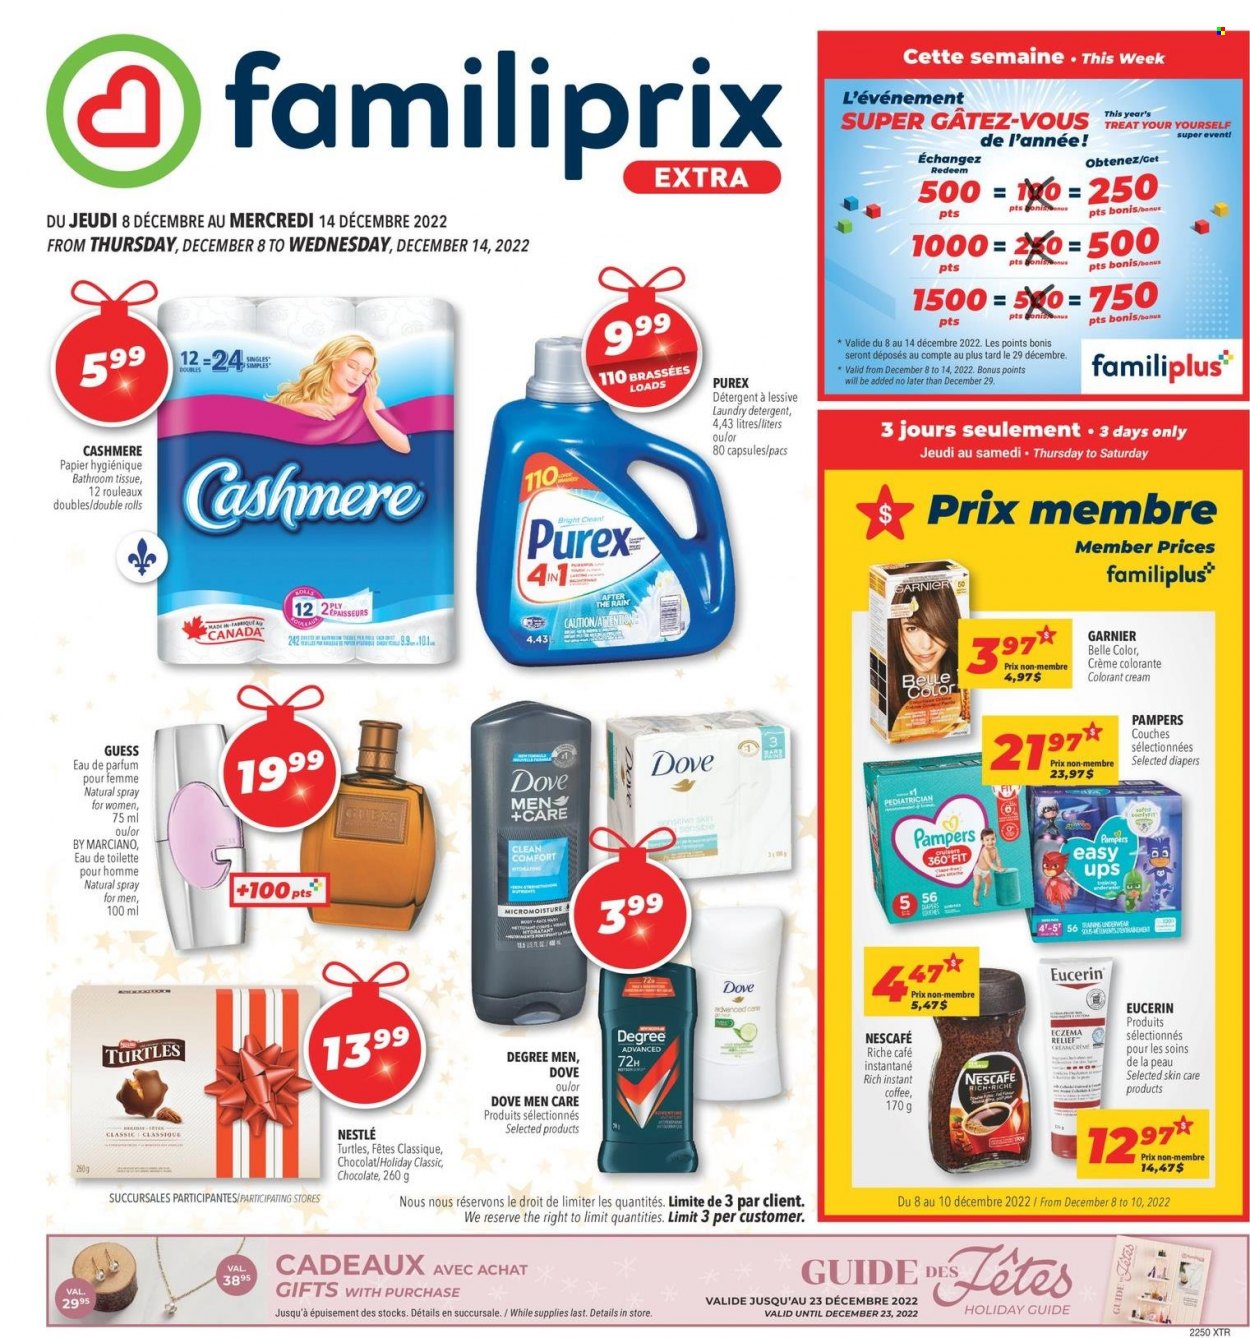 Familiprix Extra flyer  - December 08, 2022 - December 14, 2022.